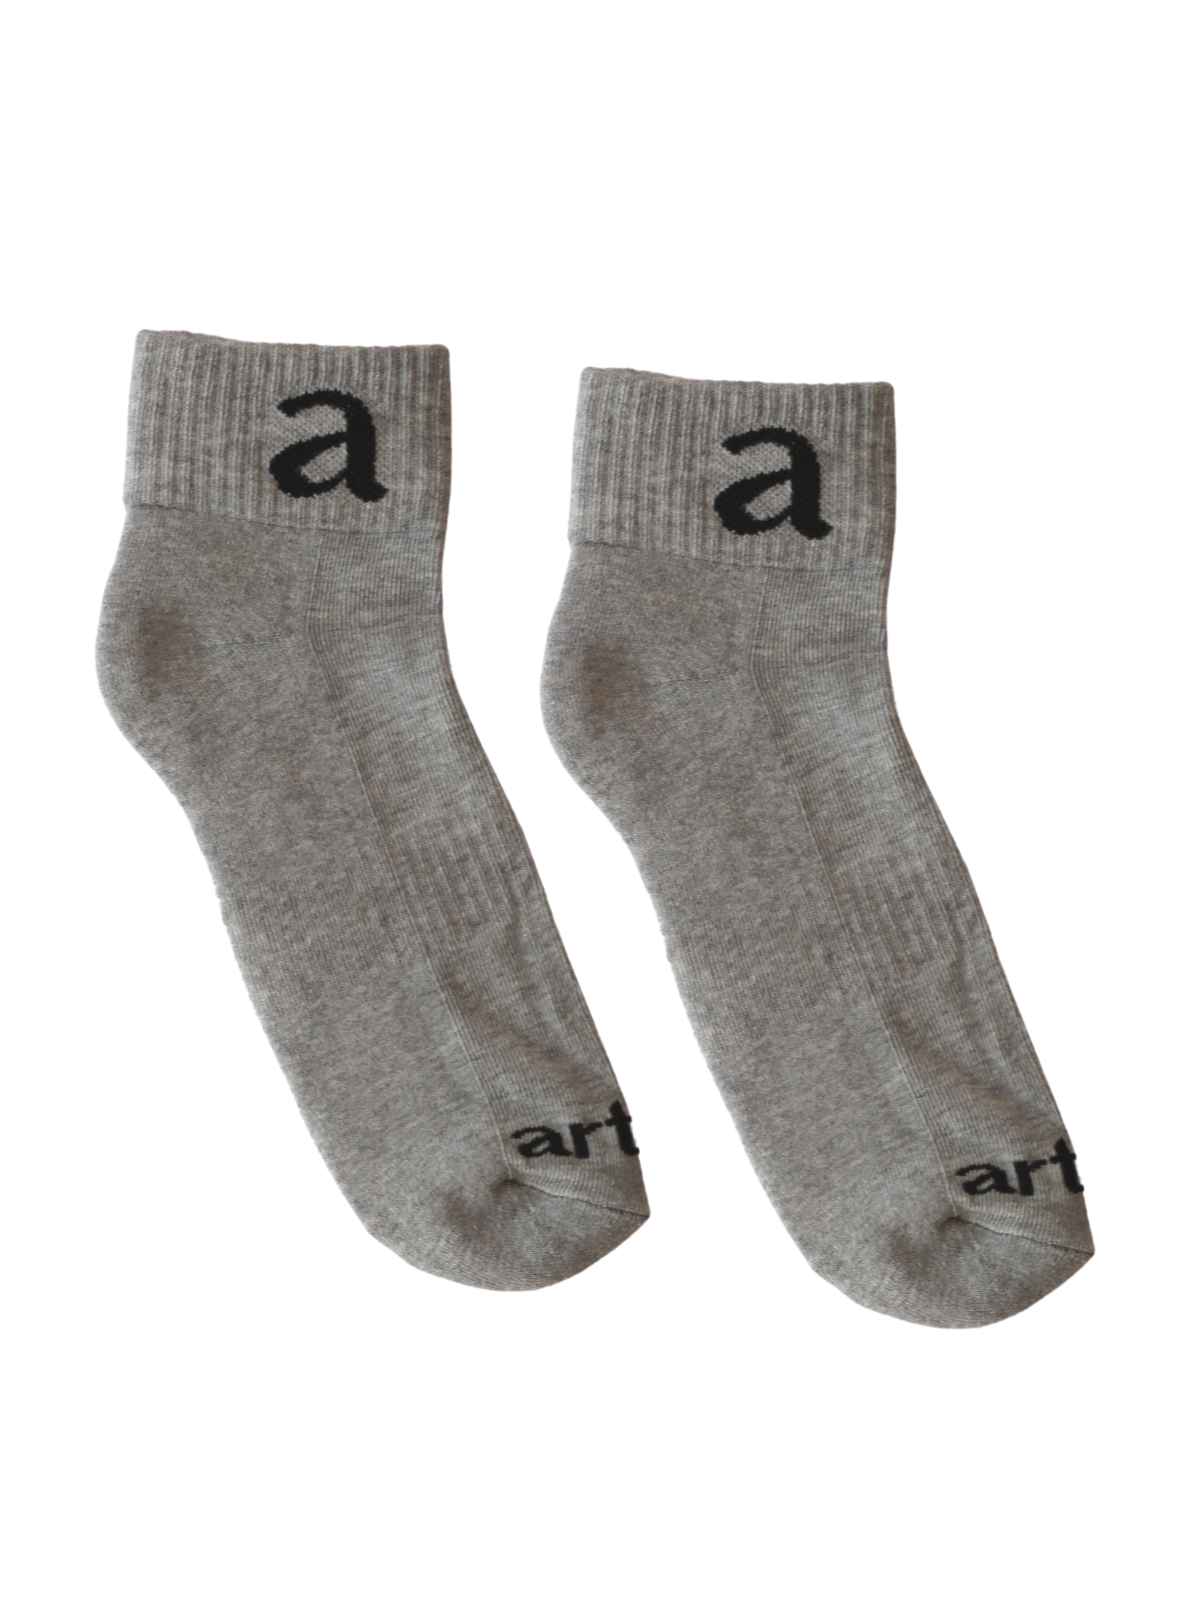 Grey Ankle Socks - Artclub and Friends